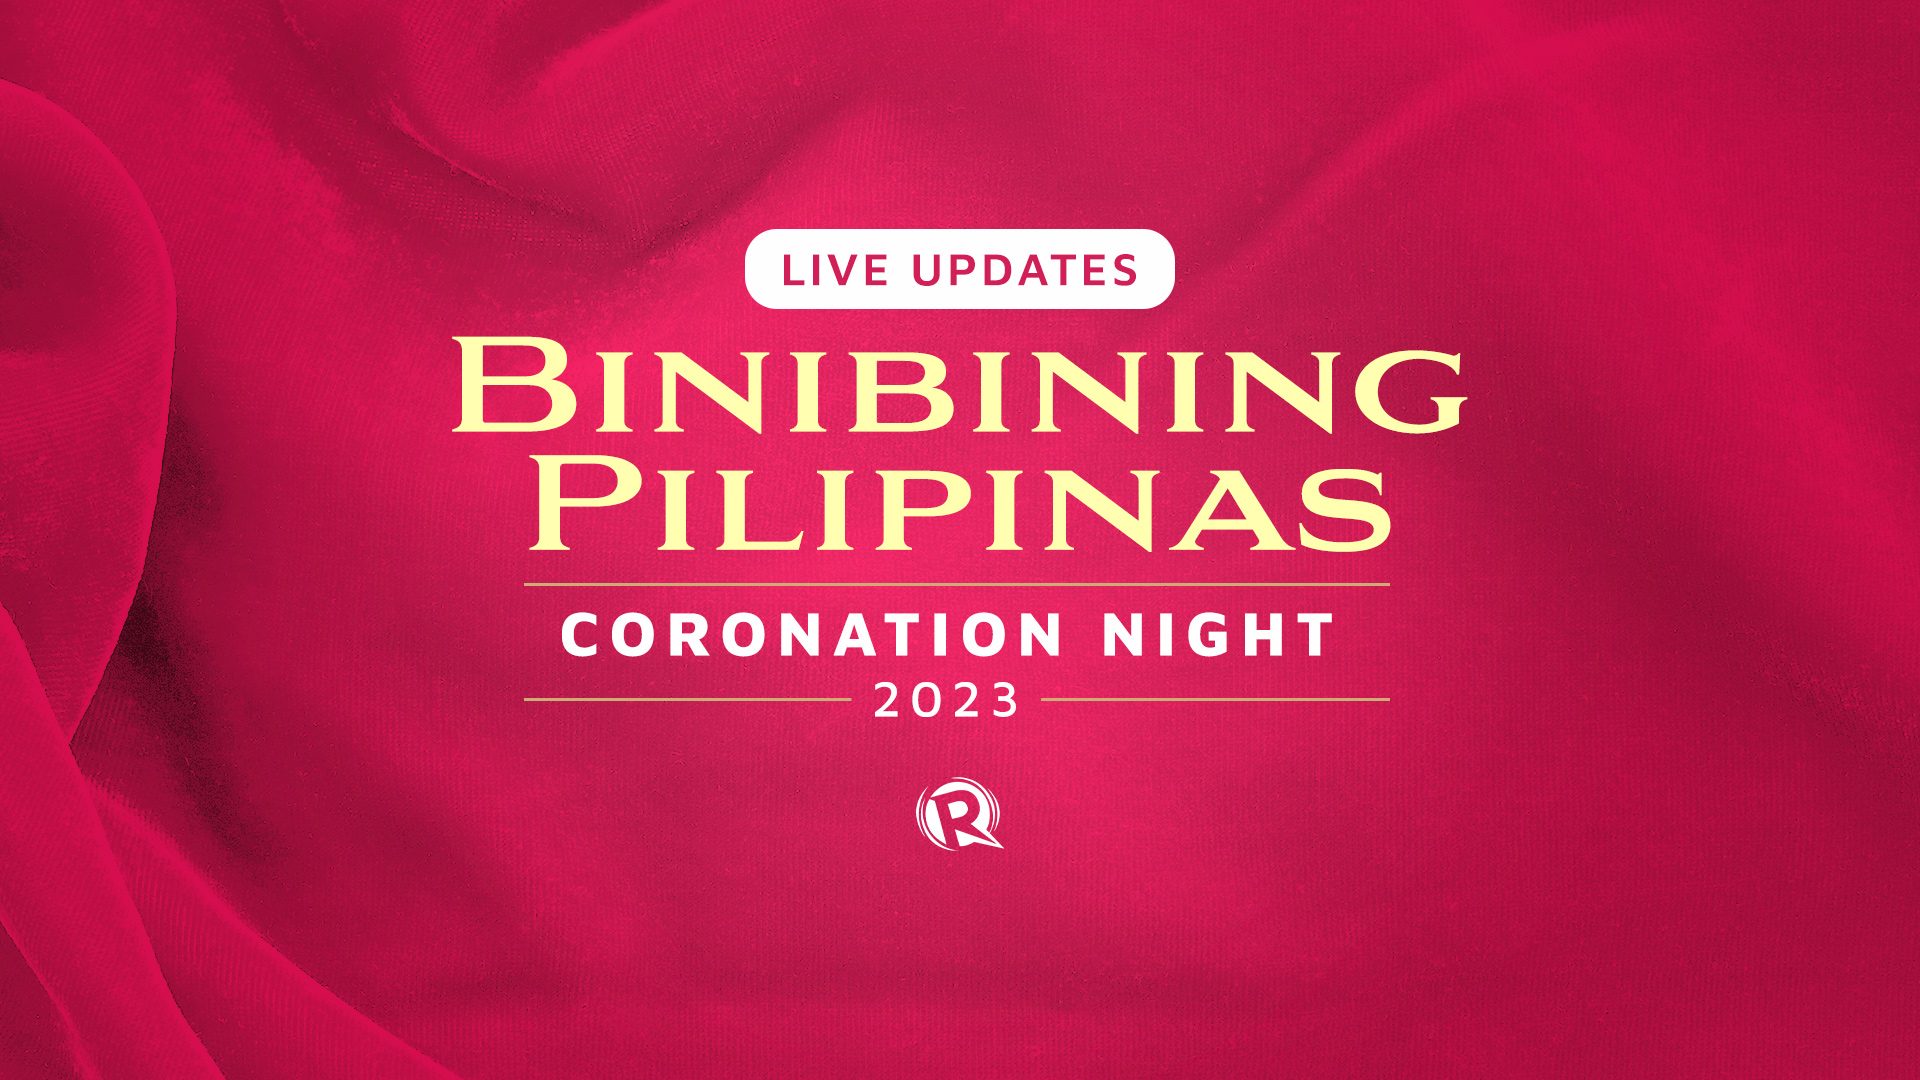 HIGHLIGHTS: Binibining Pilipinas 2023 coronation night